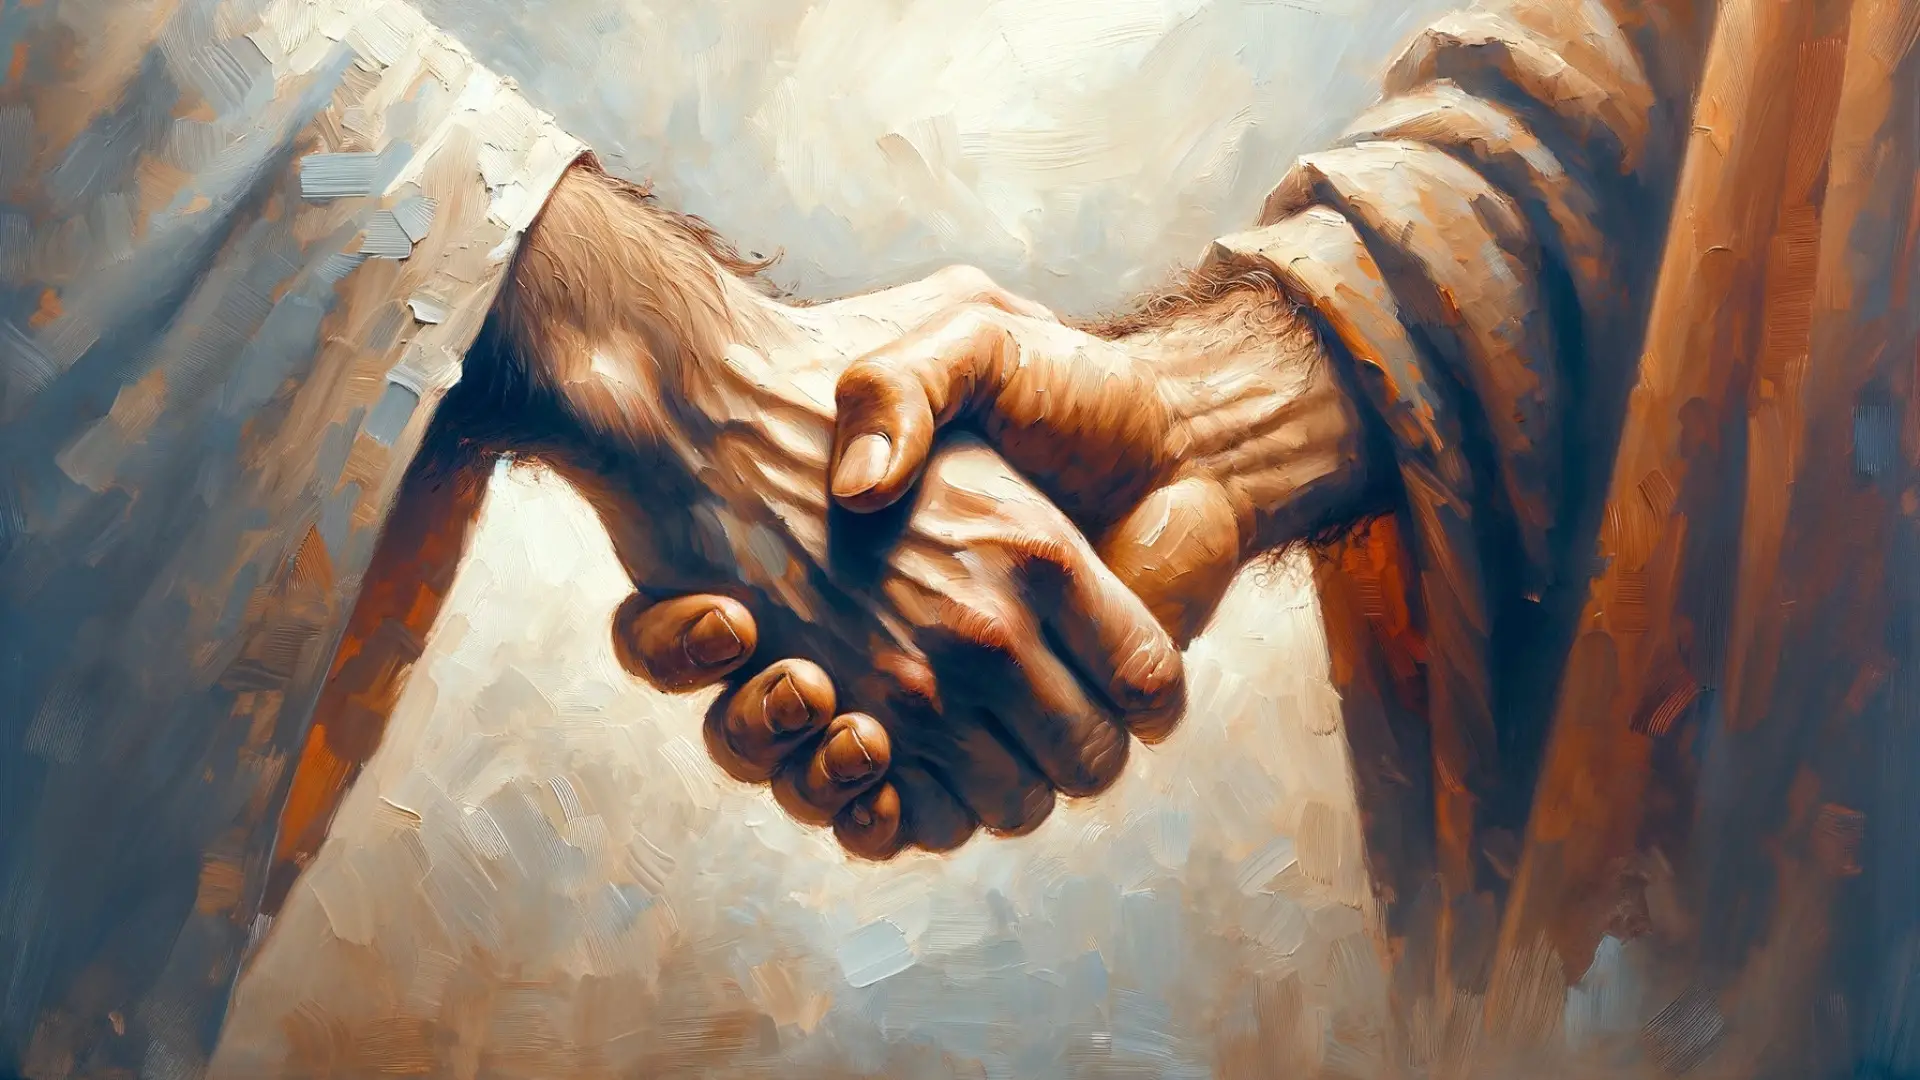 1 Samuel 20 Commentary: David and Jonathan’s Alliance